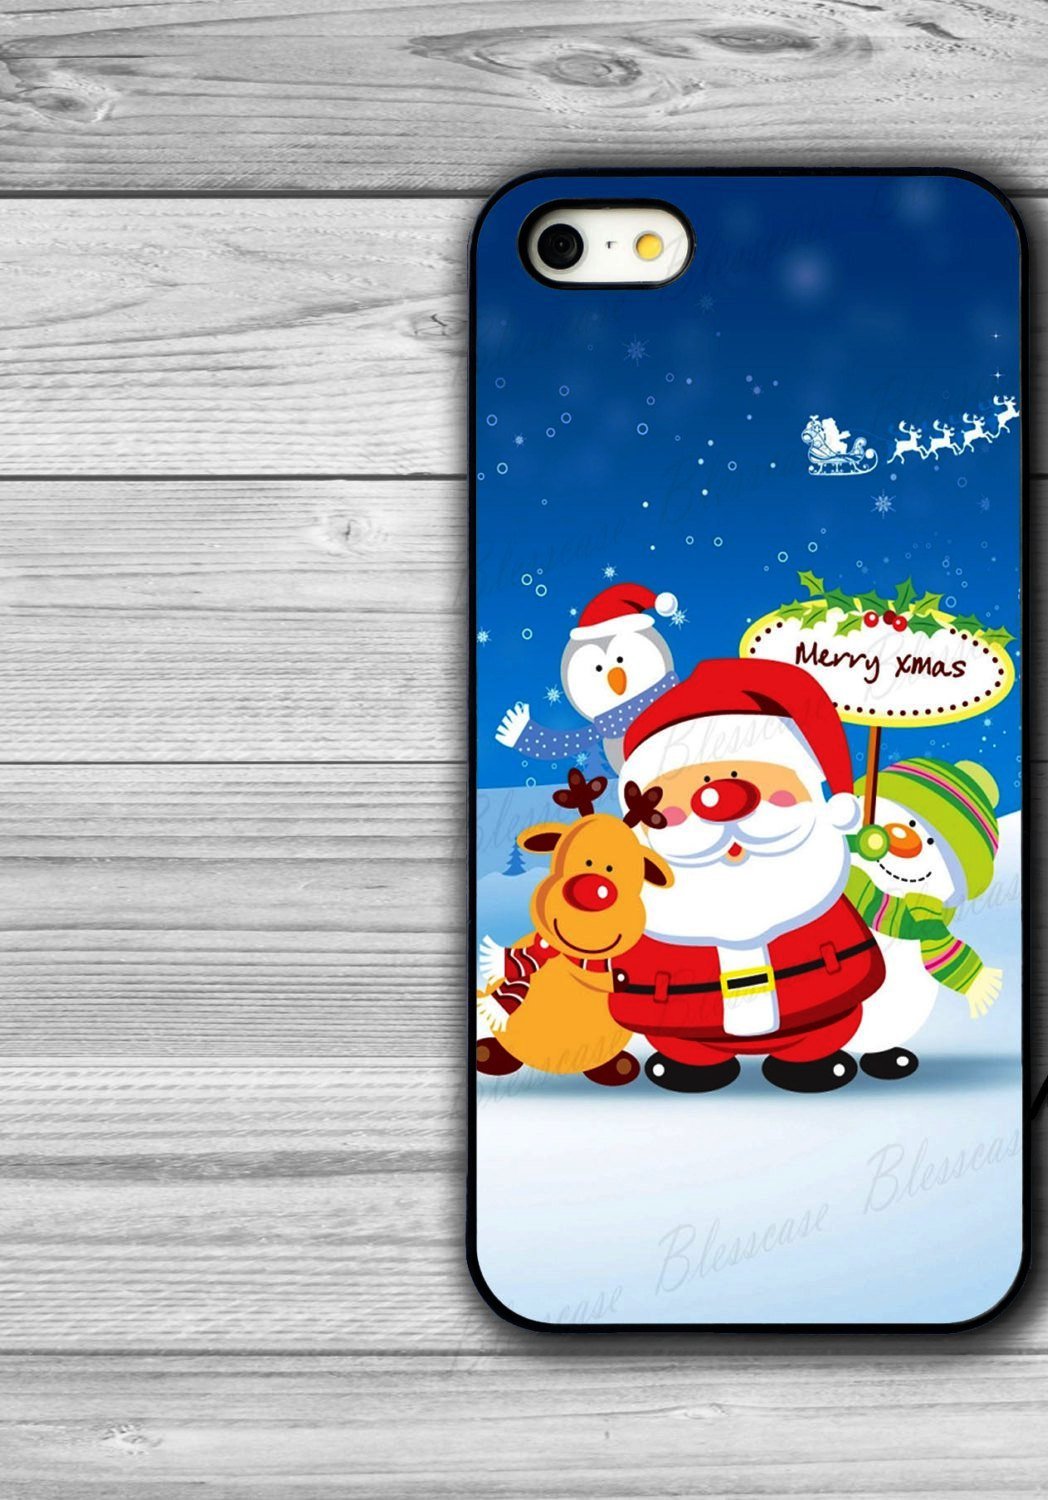 11-stylish-christmas-iphone-cases-for-the-festive-season